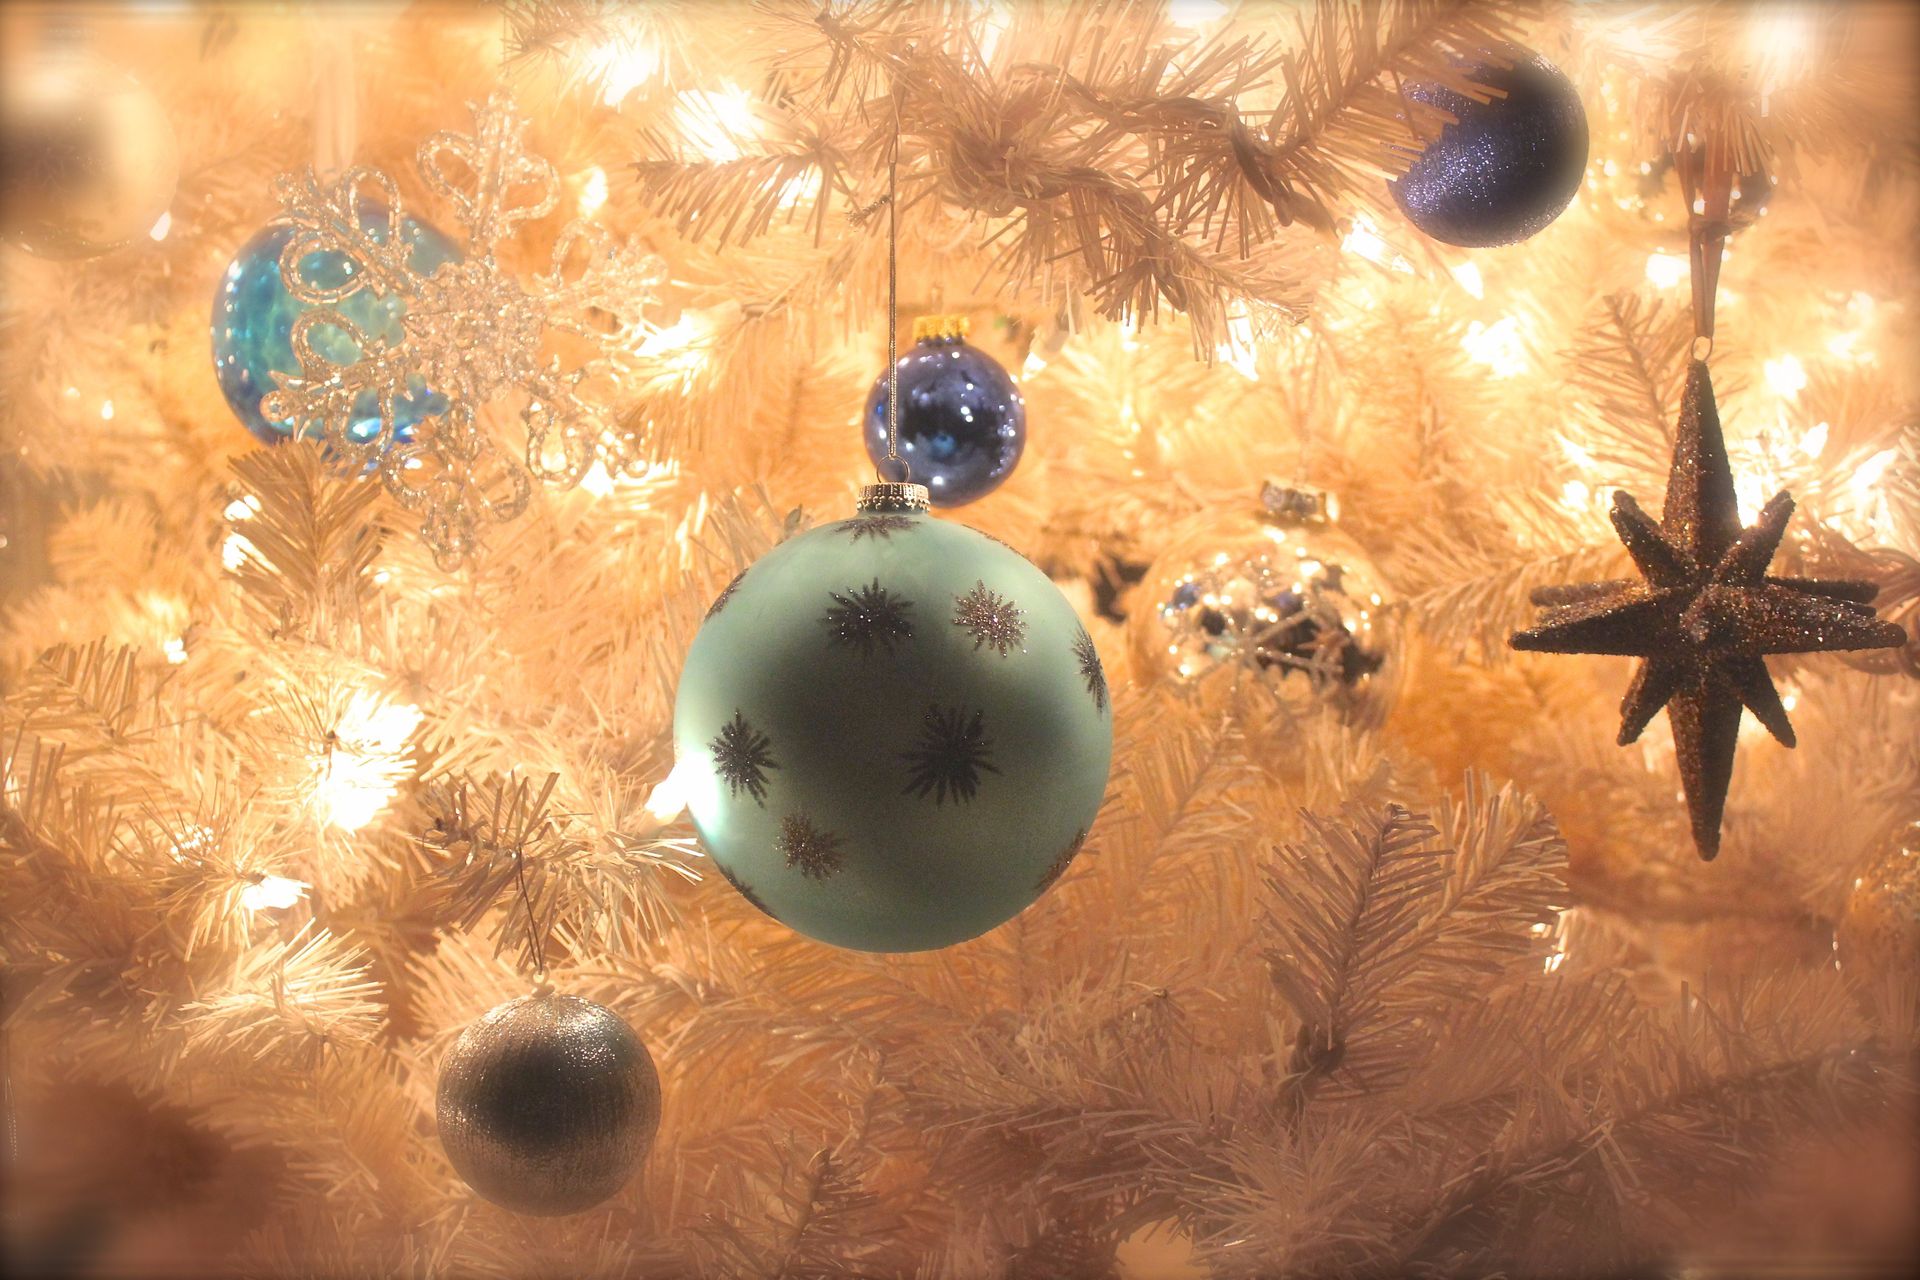 Christmas tree decorating